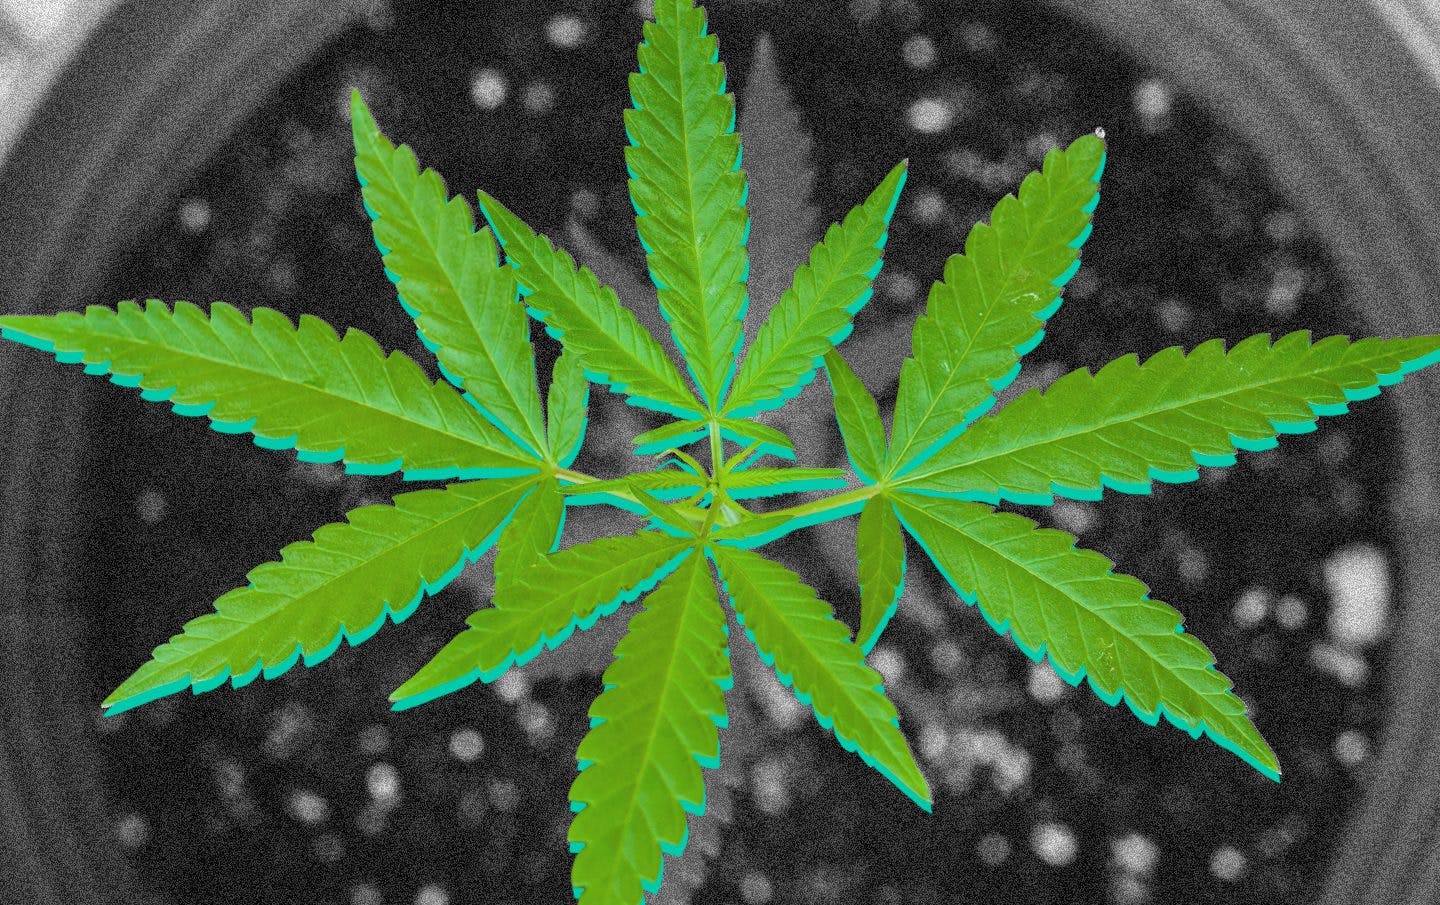 Is it legal to grow medical marijuana?